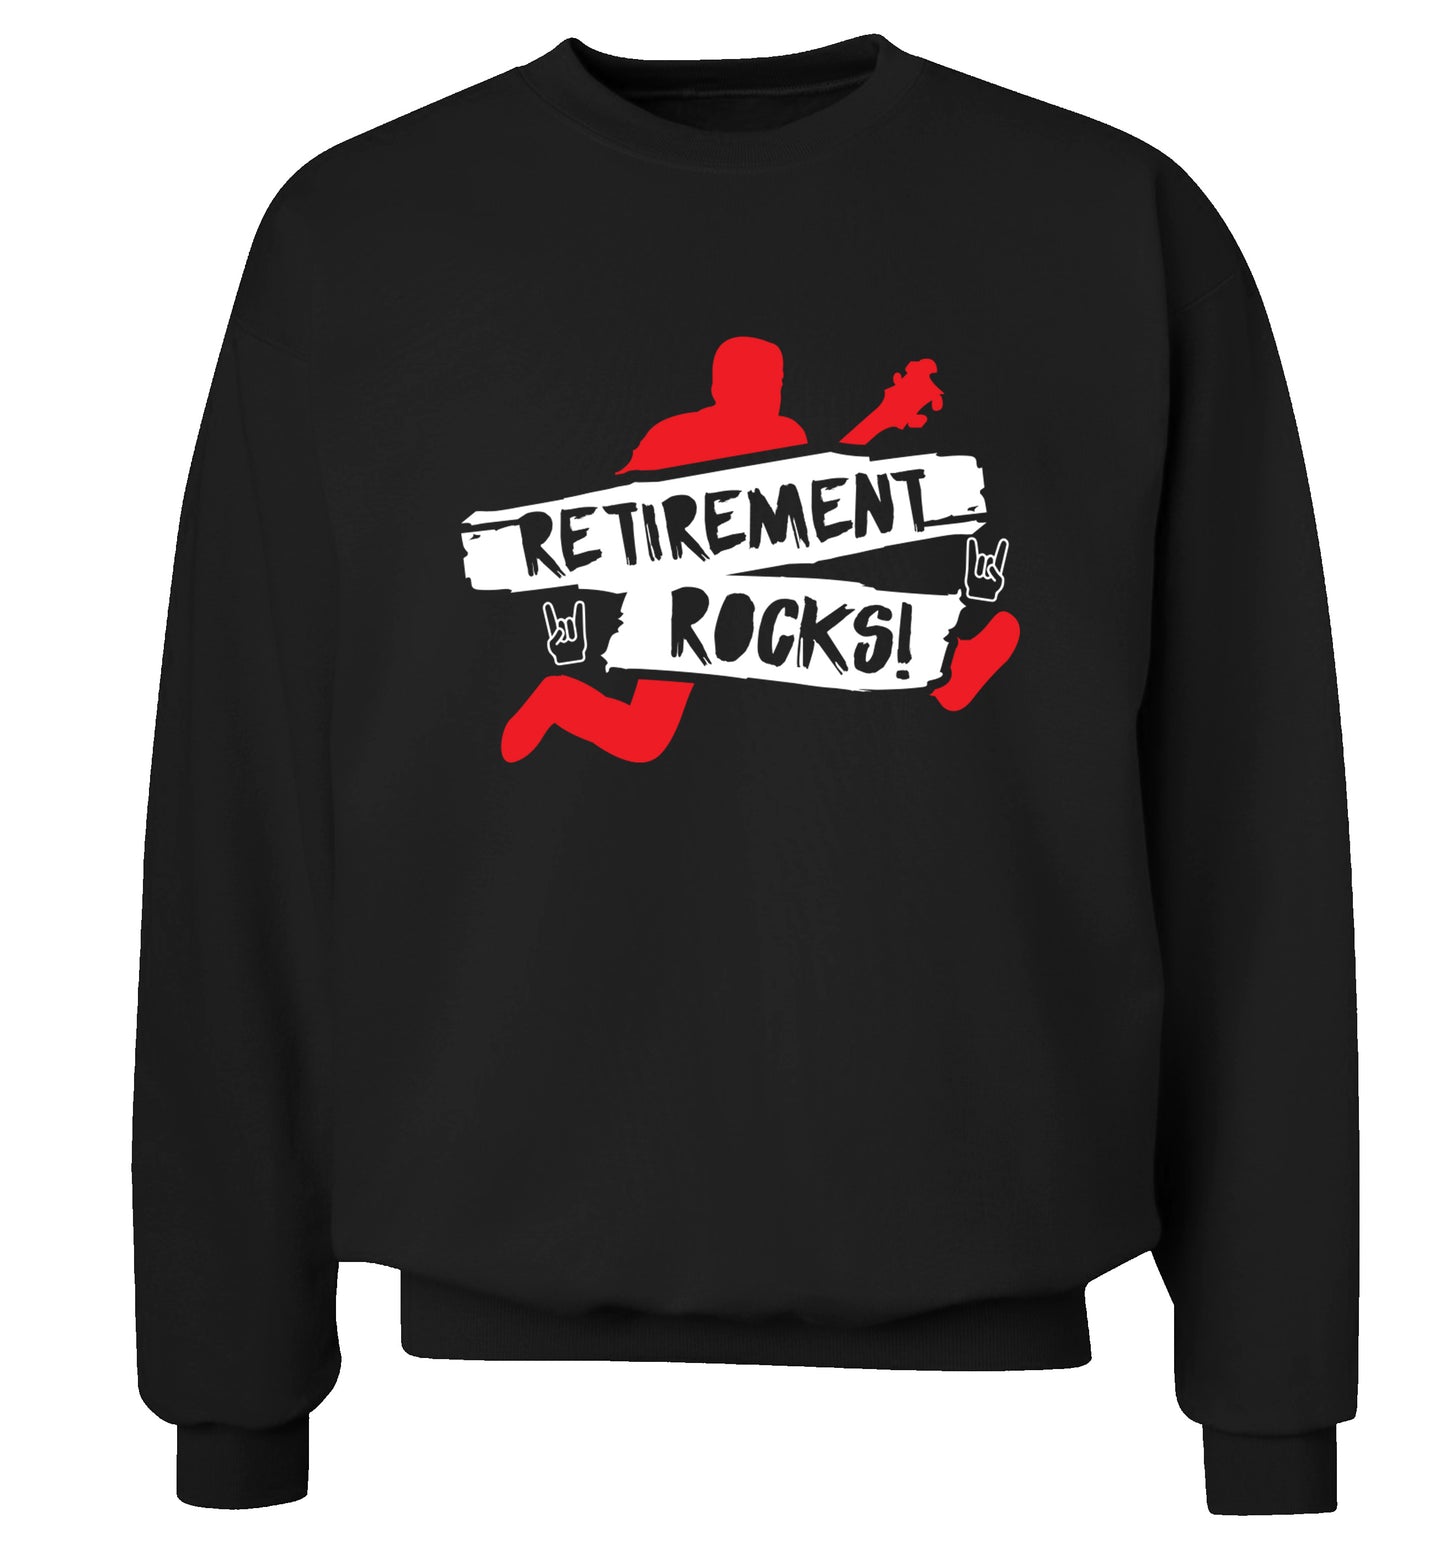 Retirement Rocks Adult's unisex black Sweater 2XL